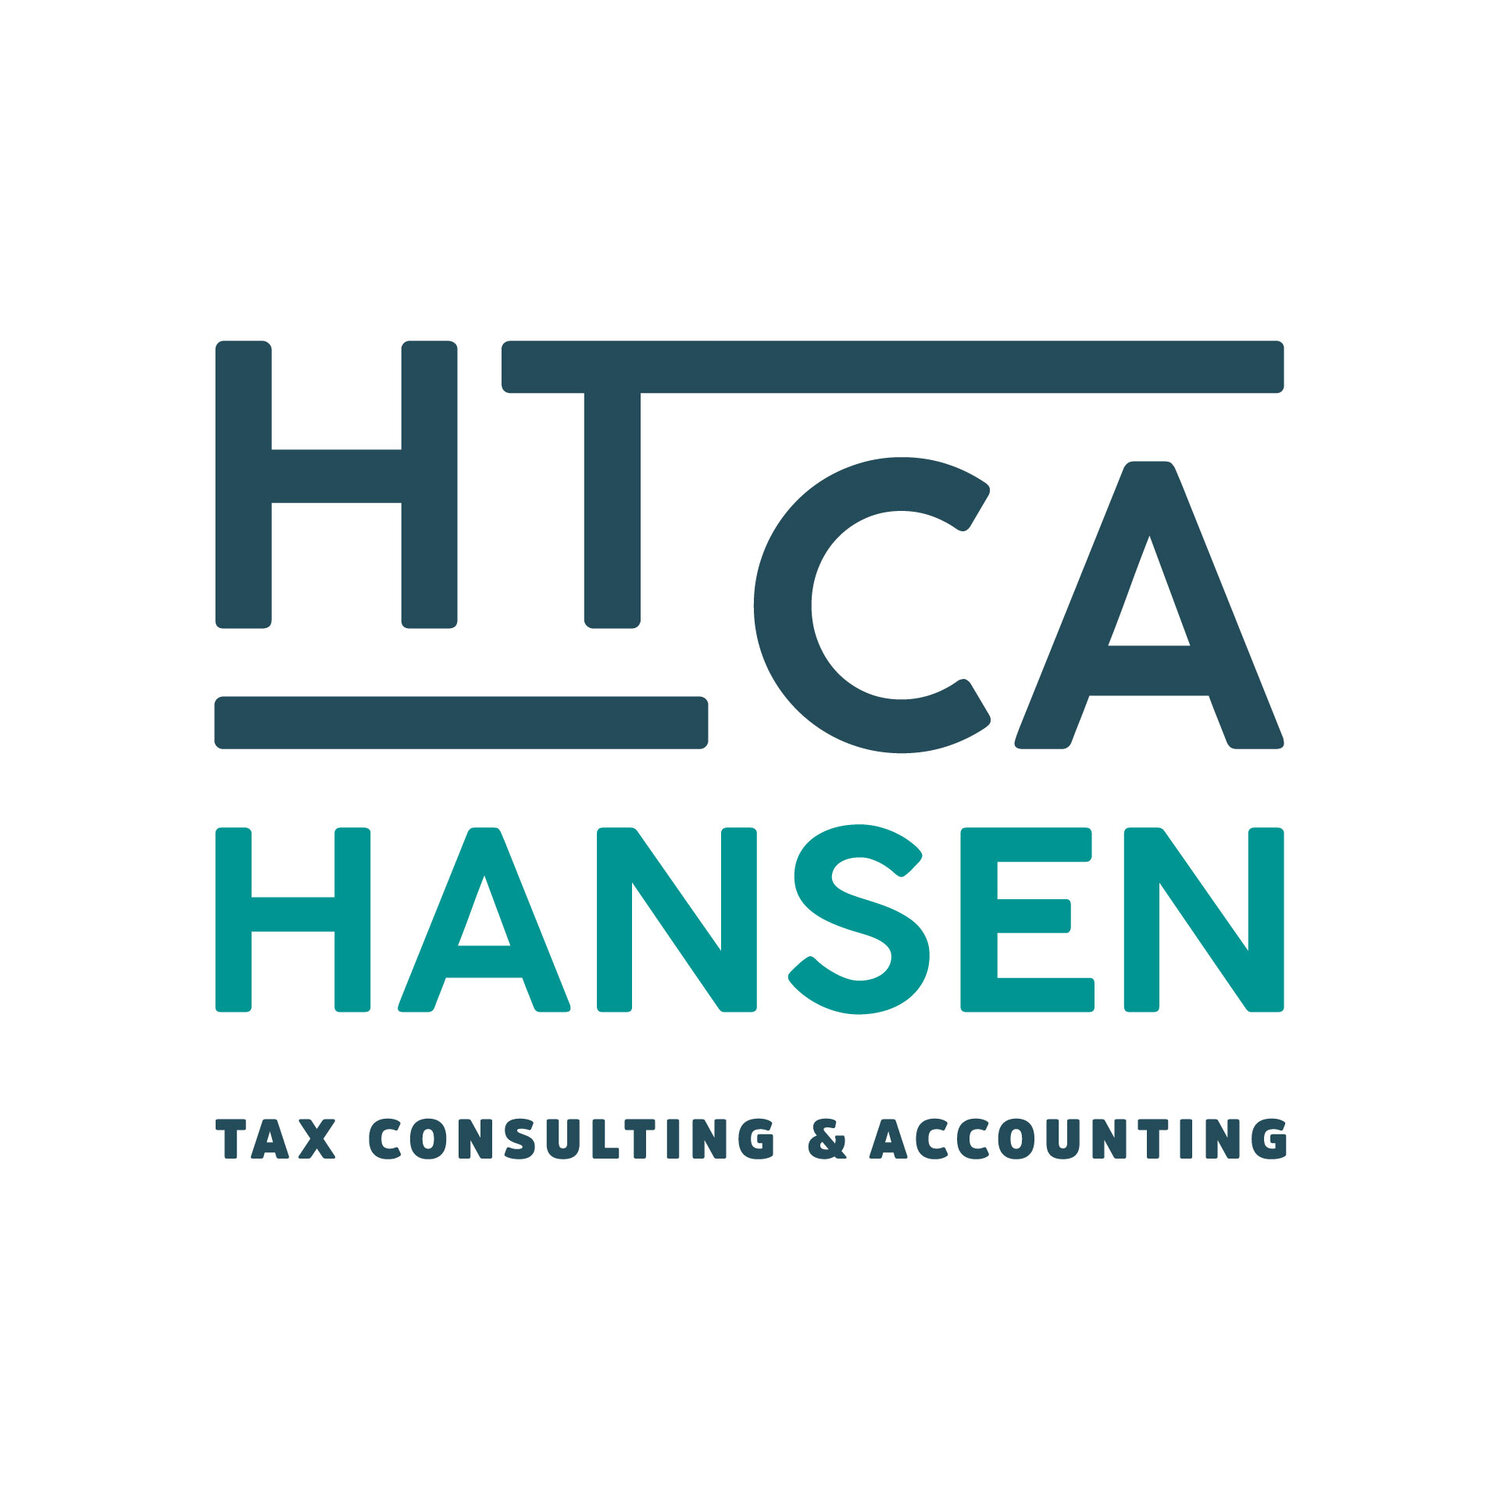 HANSEN TAX CONSULTING & ACCOUNTING LLC